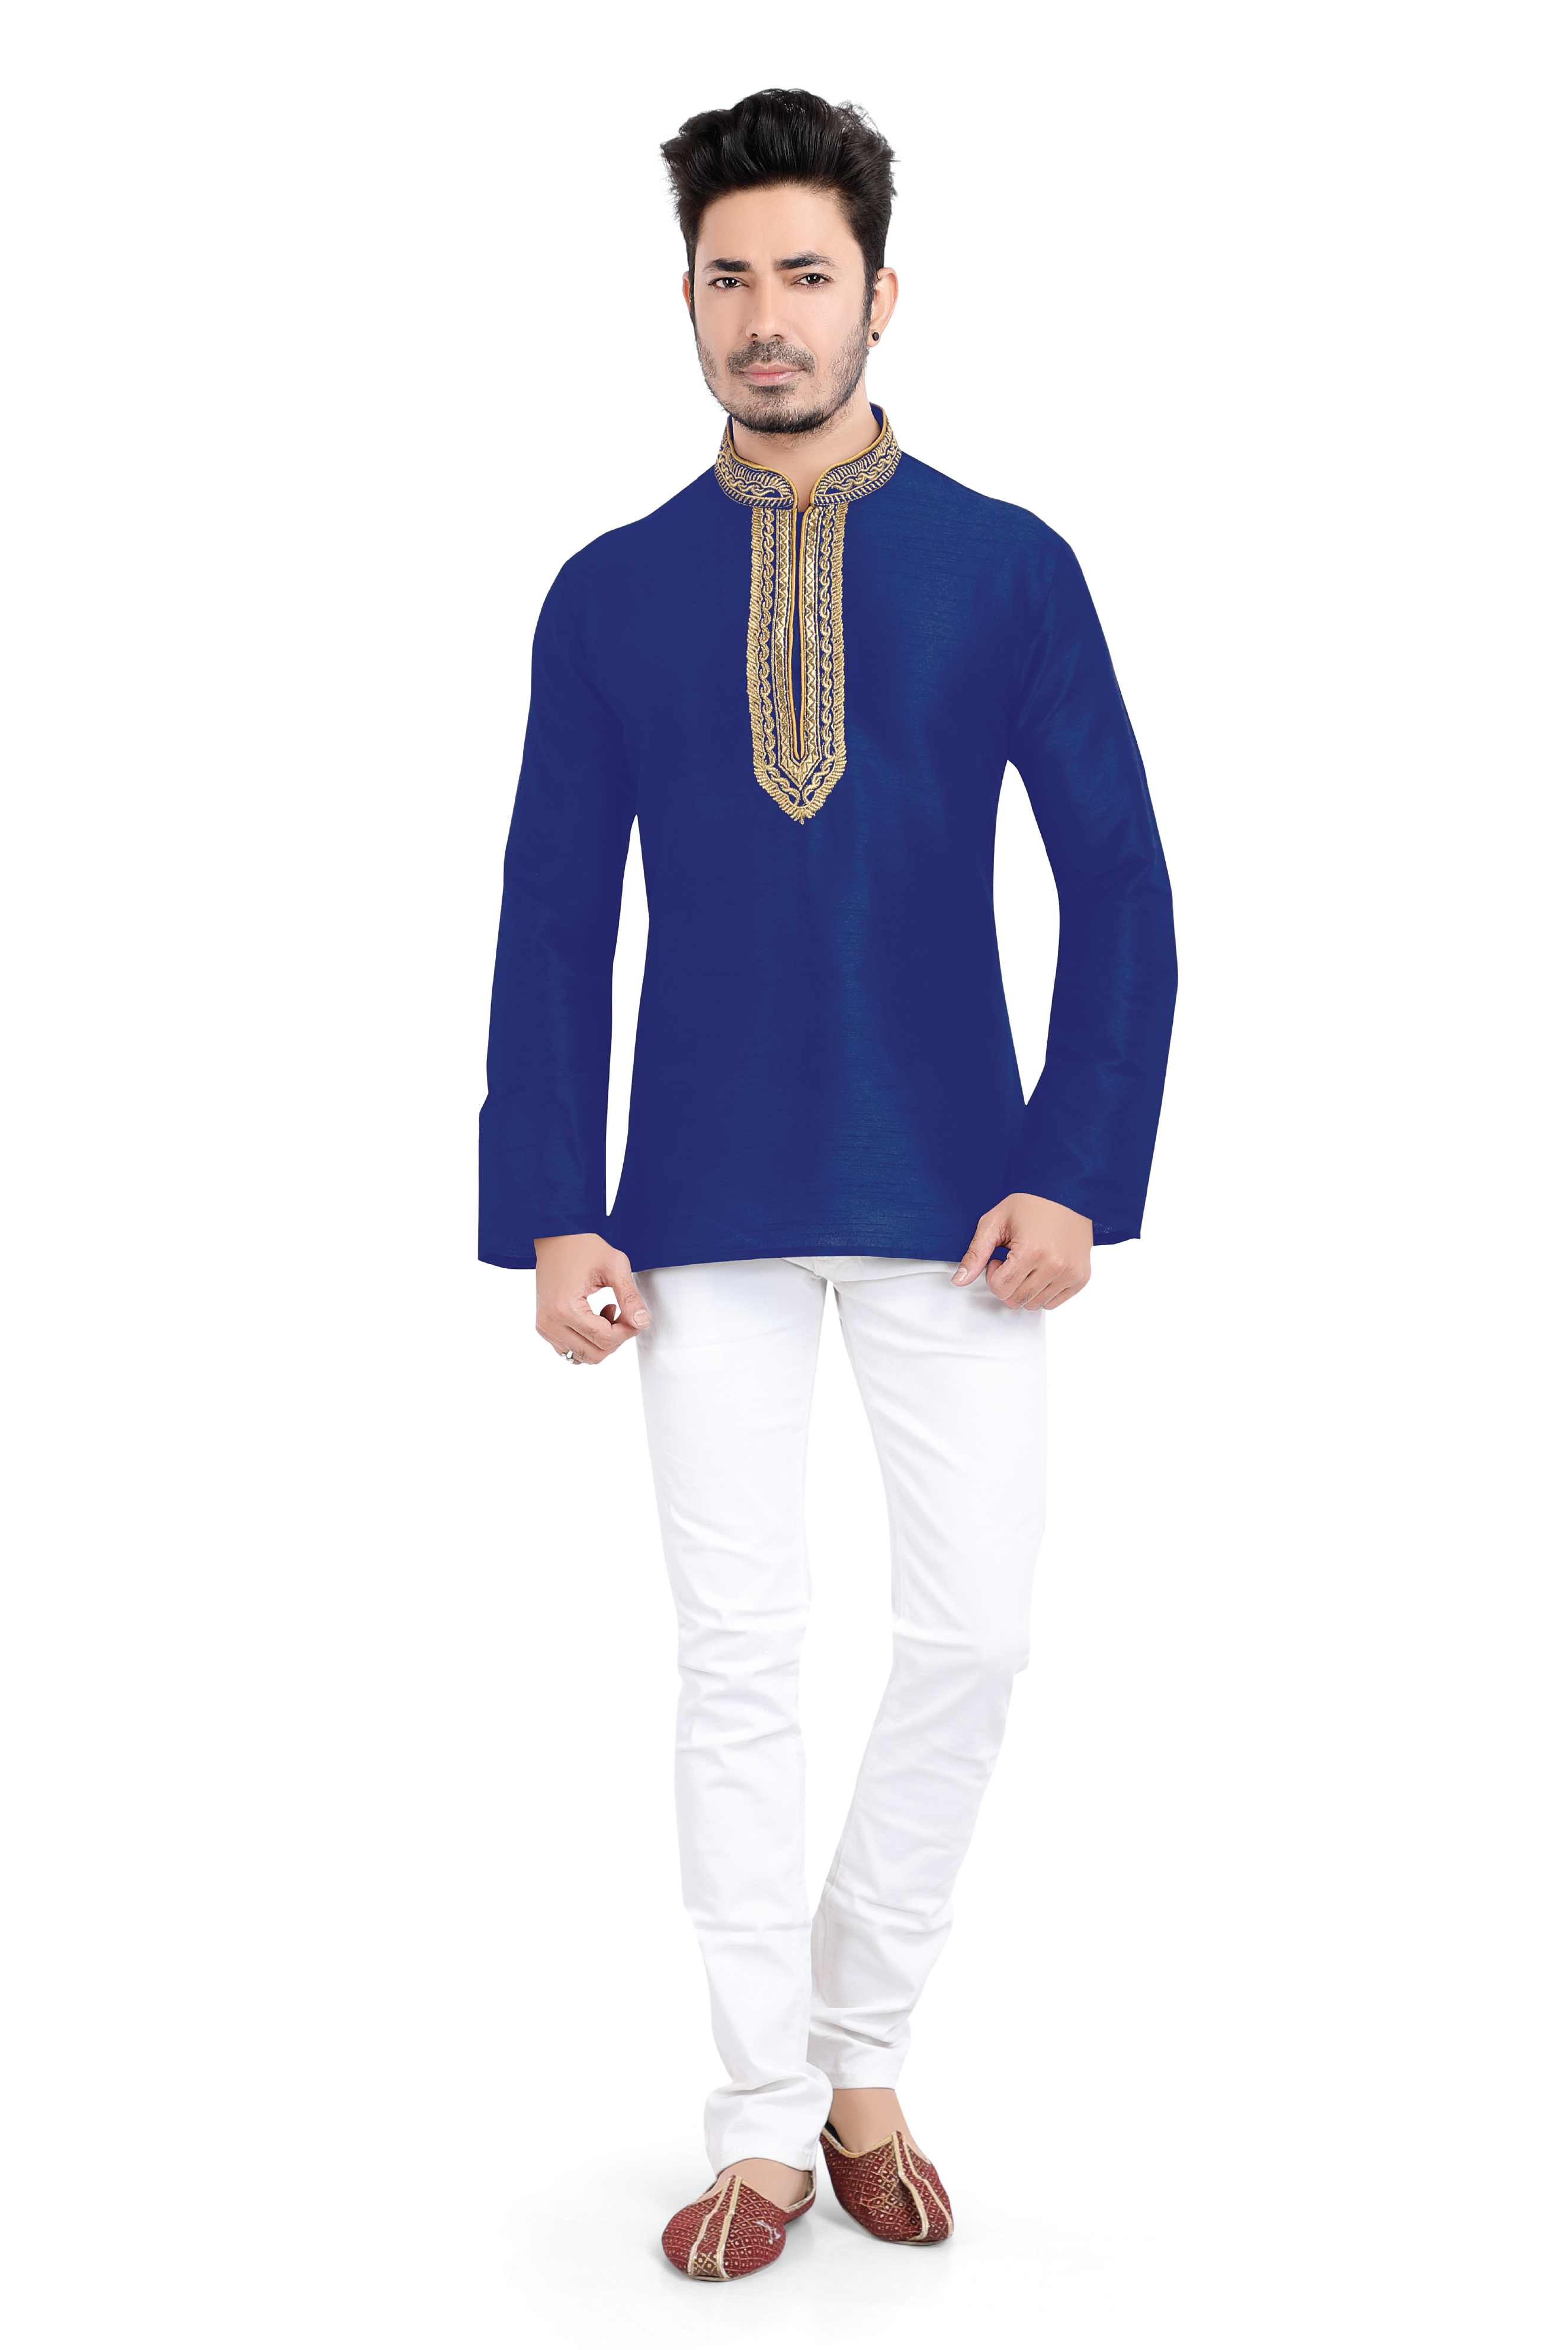 Banarasi Dupion Silk Short Kurta with embroidery in Royal Blue color